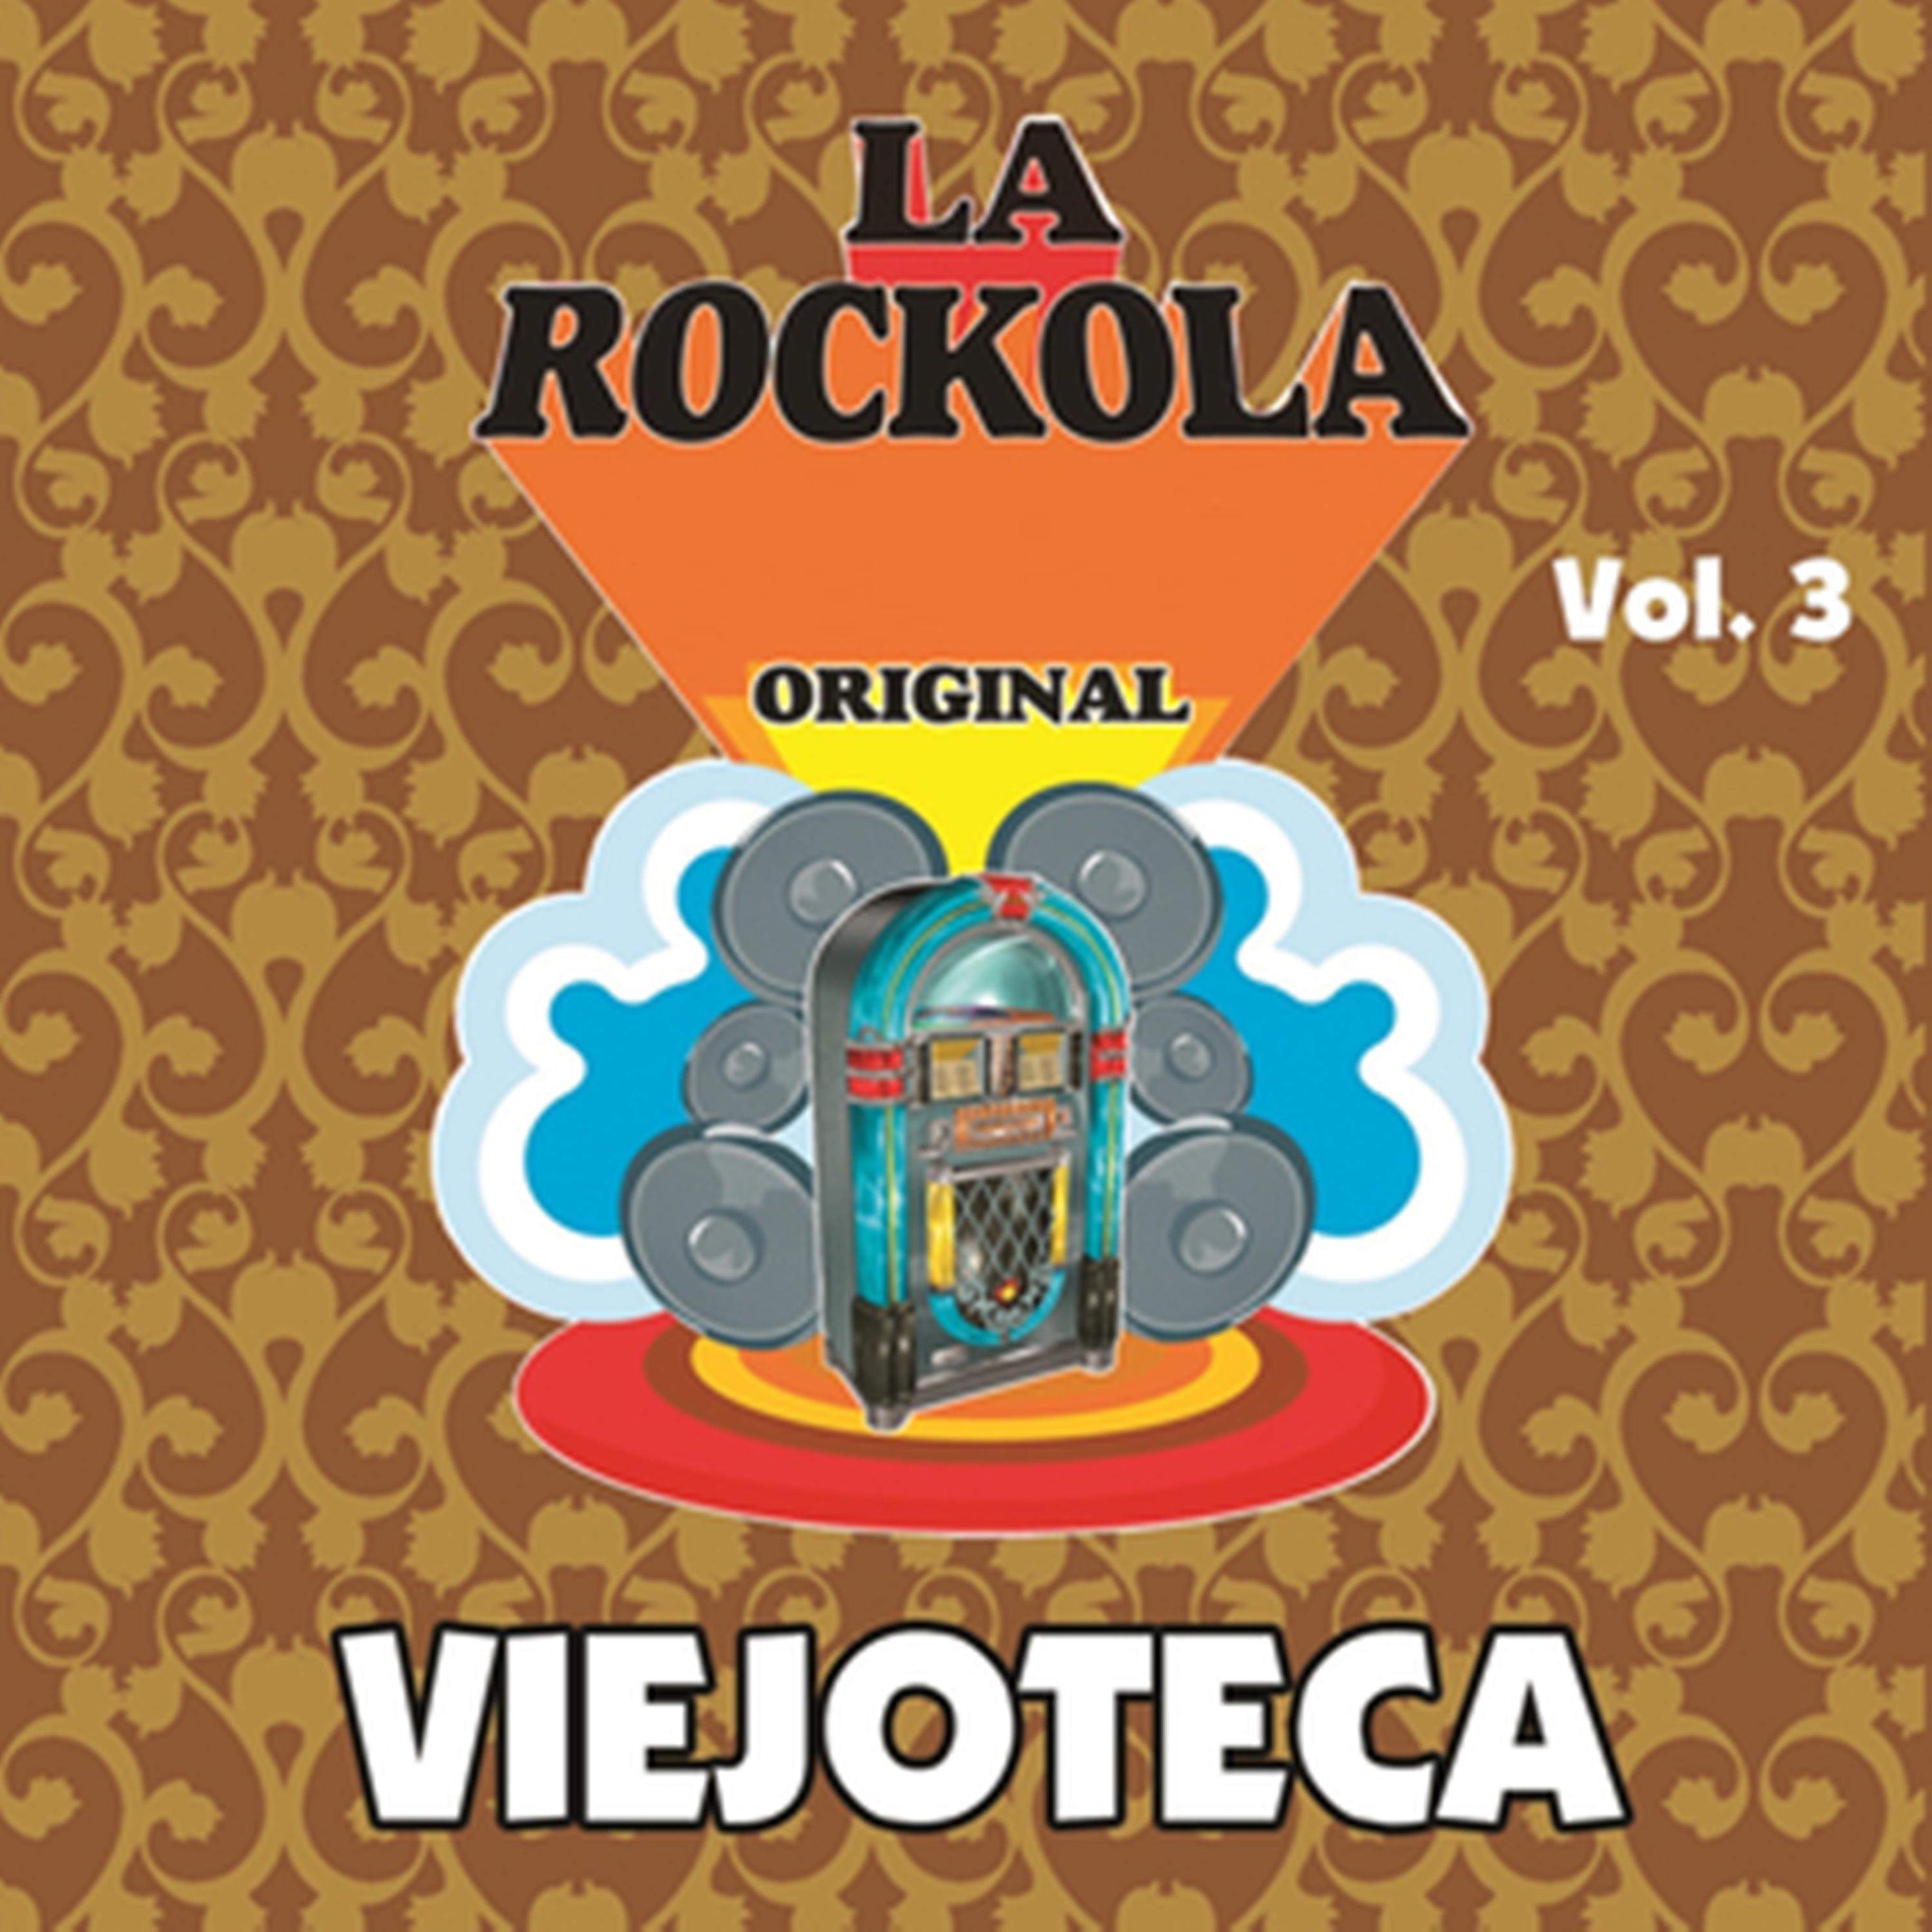 La Rockola Viejoteca, Vol. 3